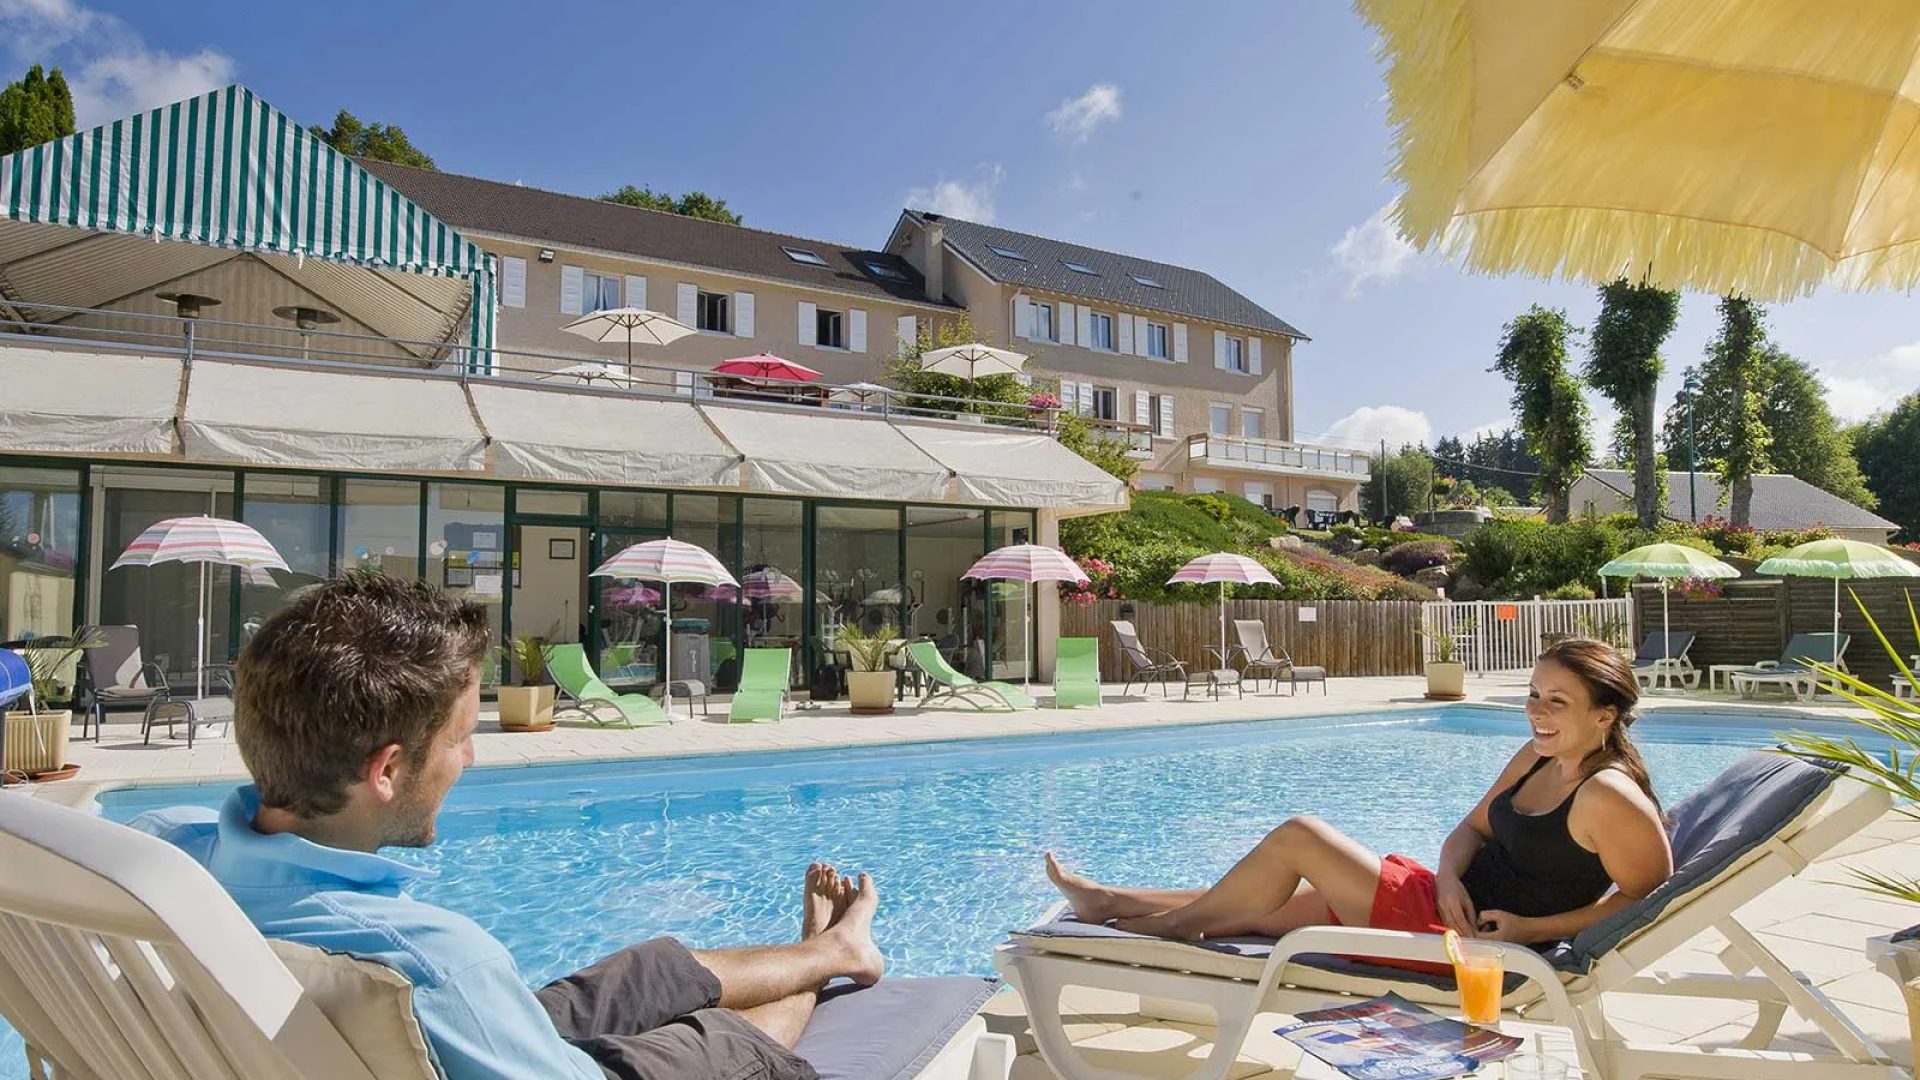 Una pareja se relaja junto a la piscina exterior del hotel Bel Horizon en Chambon-sur-Lignon en Haute-Loire